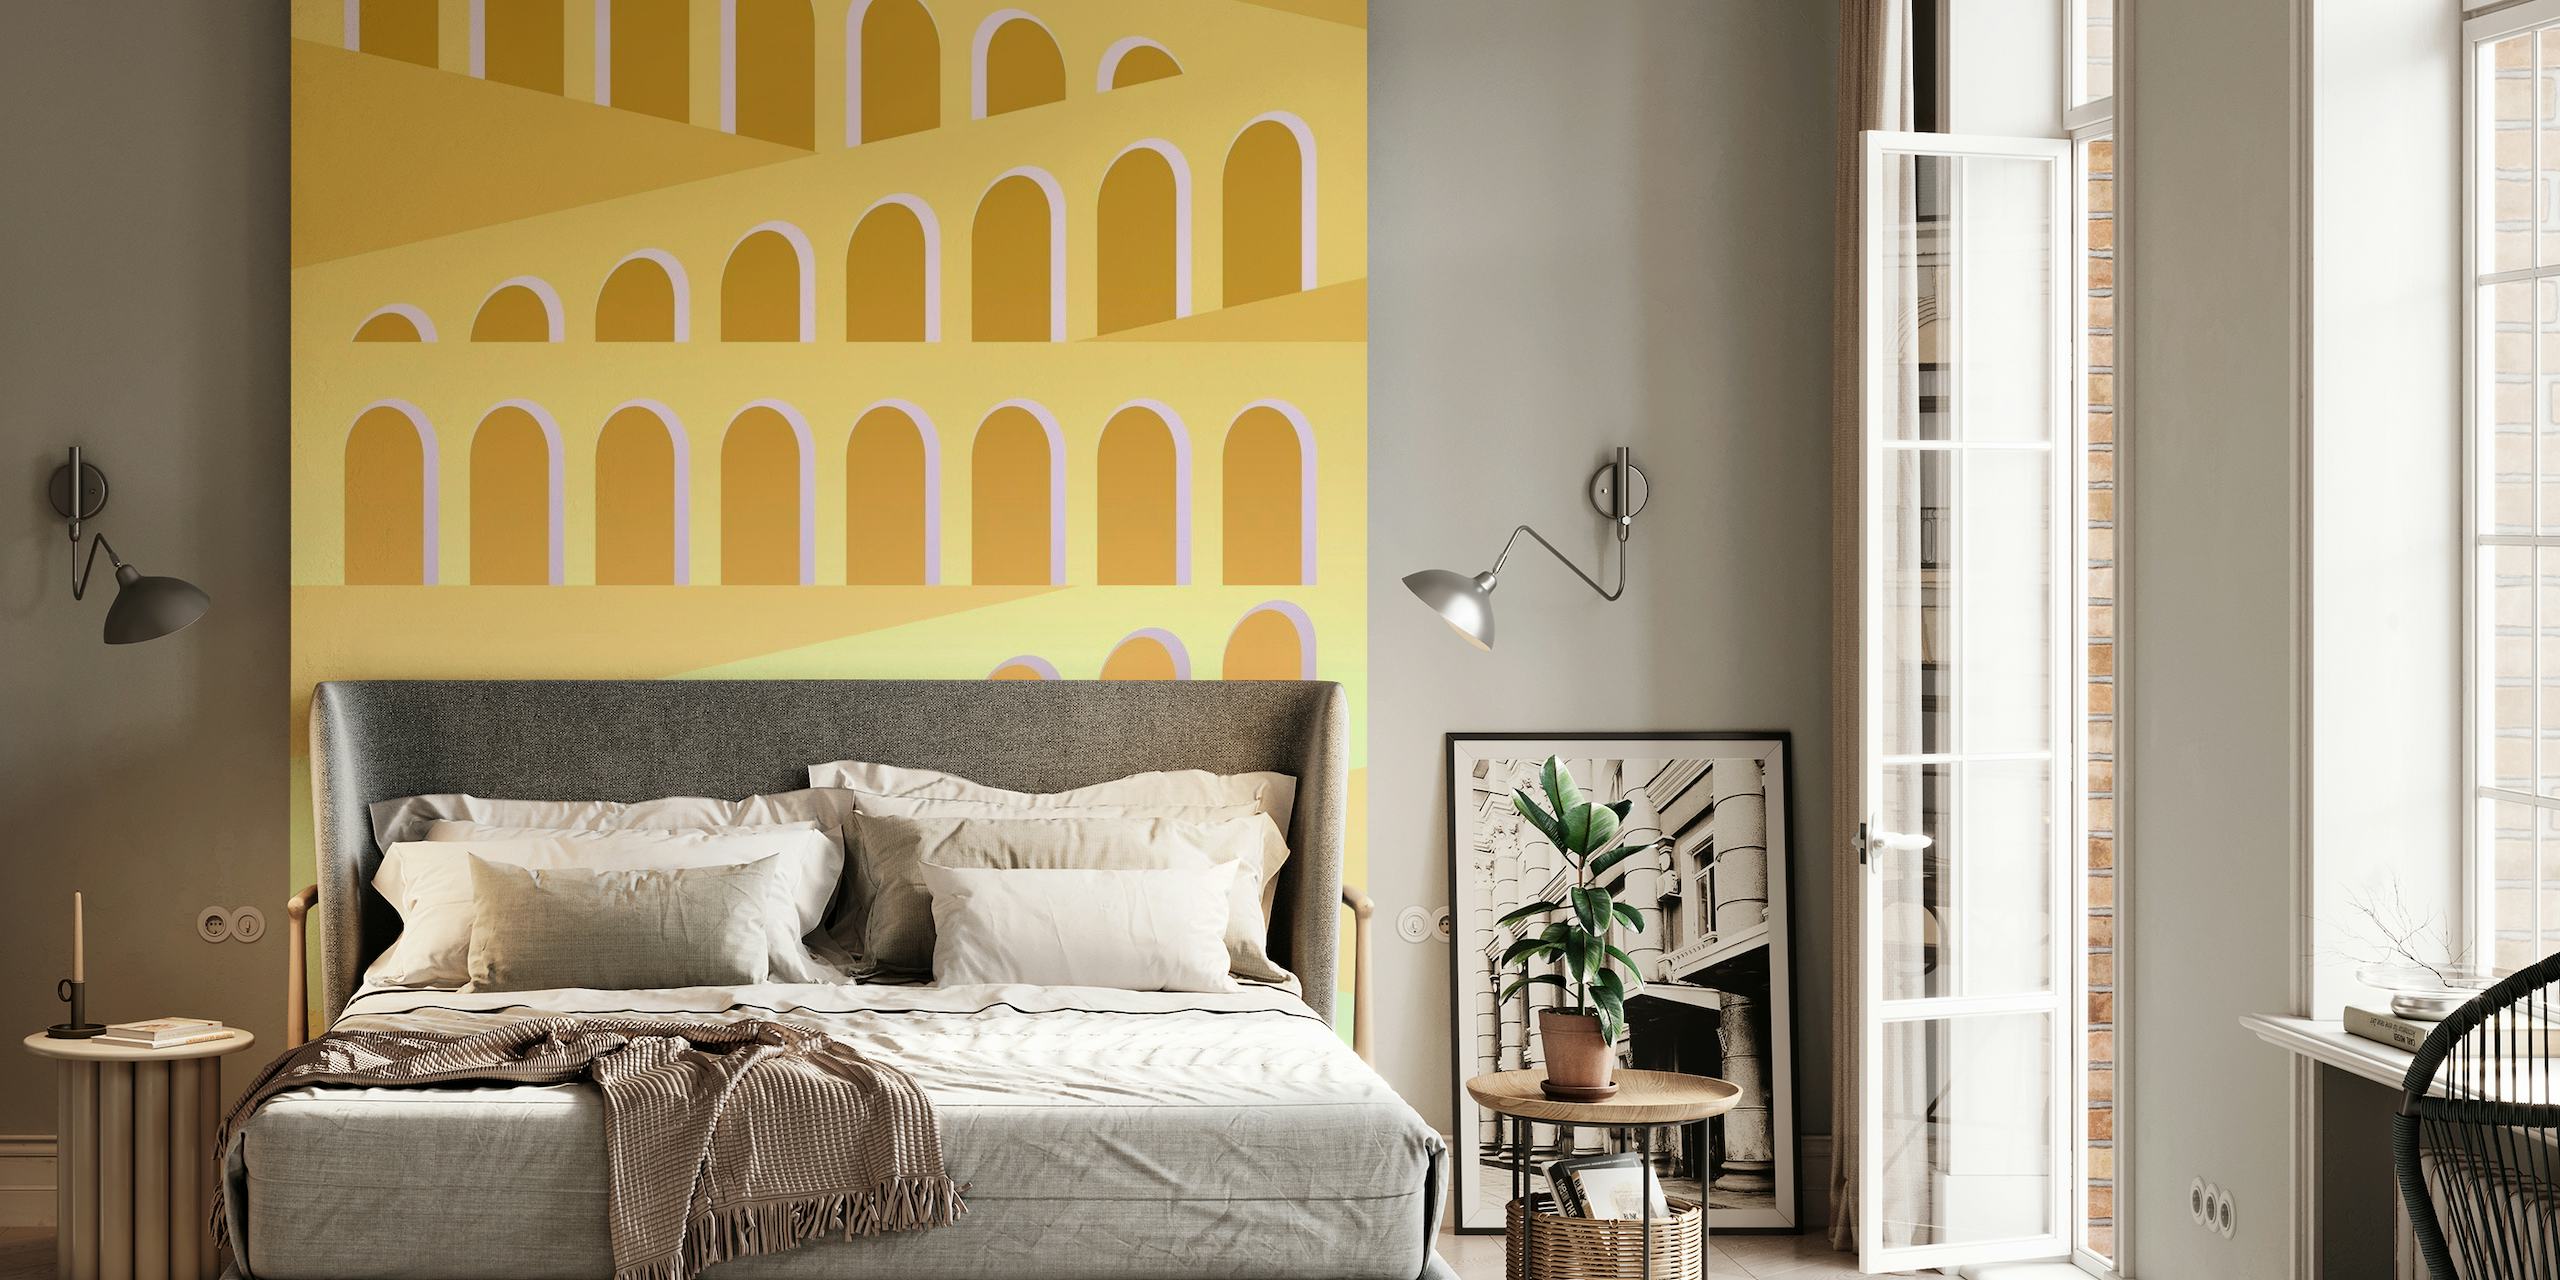 Italiensk Arches vægmaleri med varme jordfarver og middelhavsarkitektonisk design